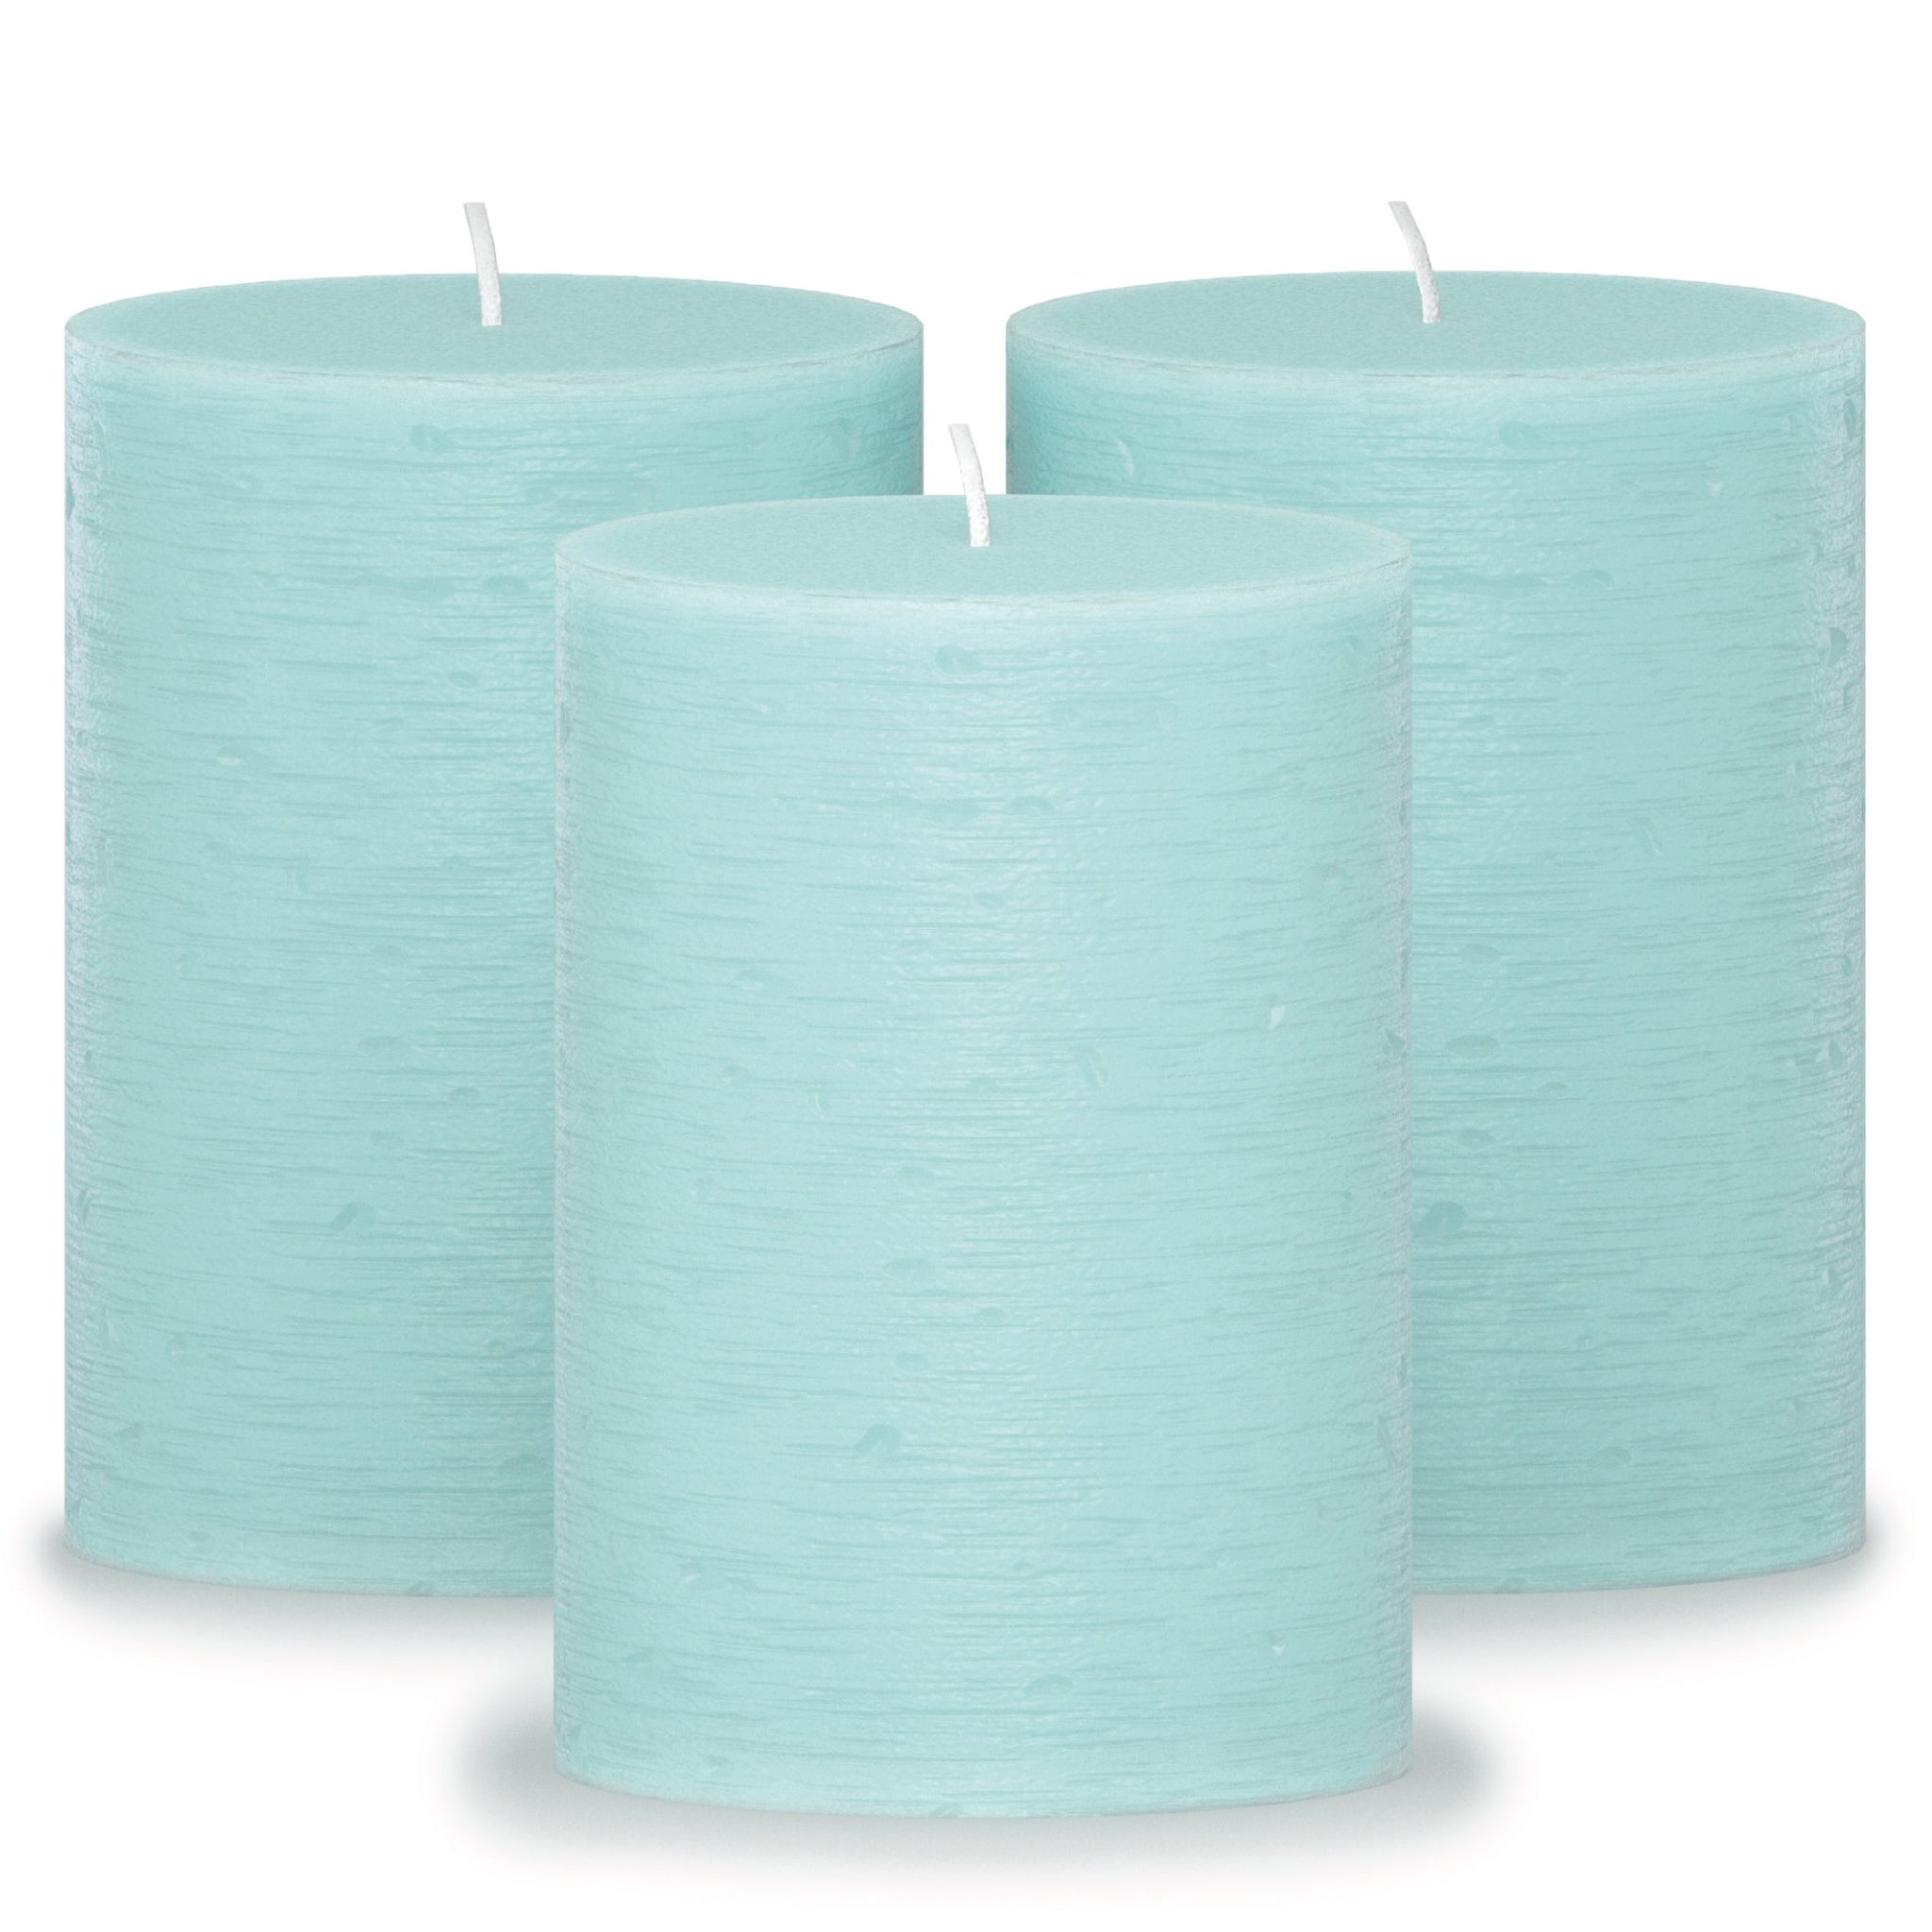 CANDWAX Light Turquoise Pillar Candles 4" - Set of 3pcs